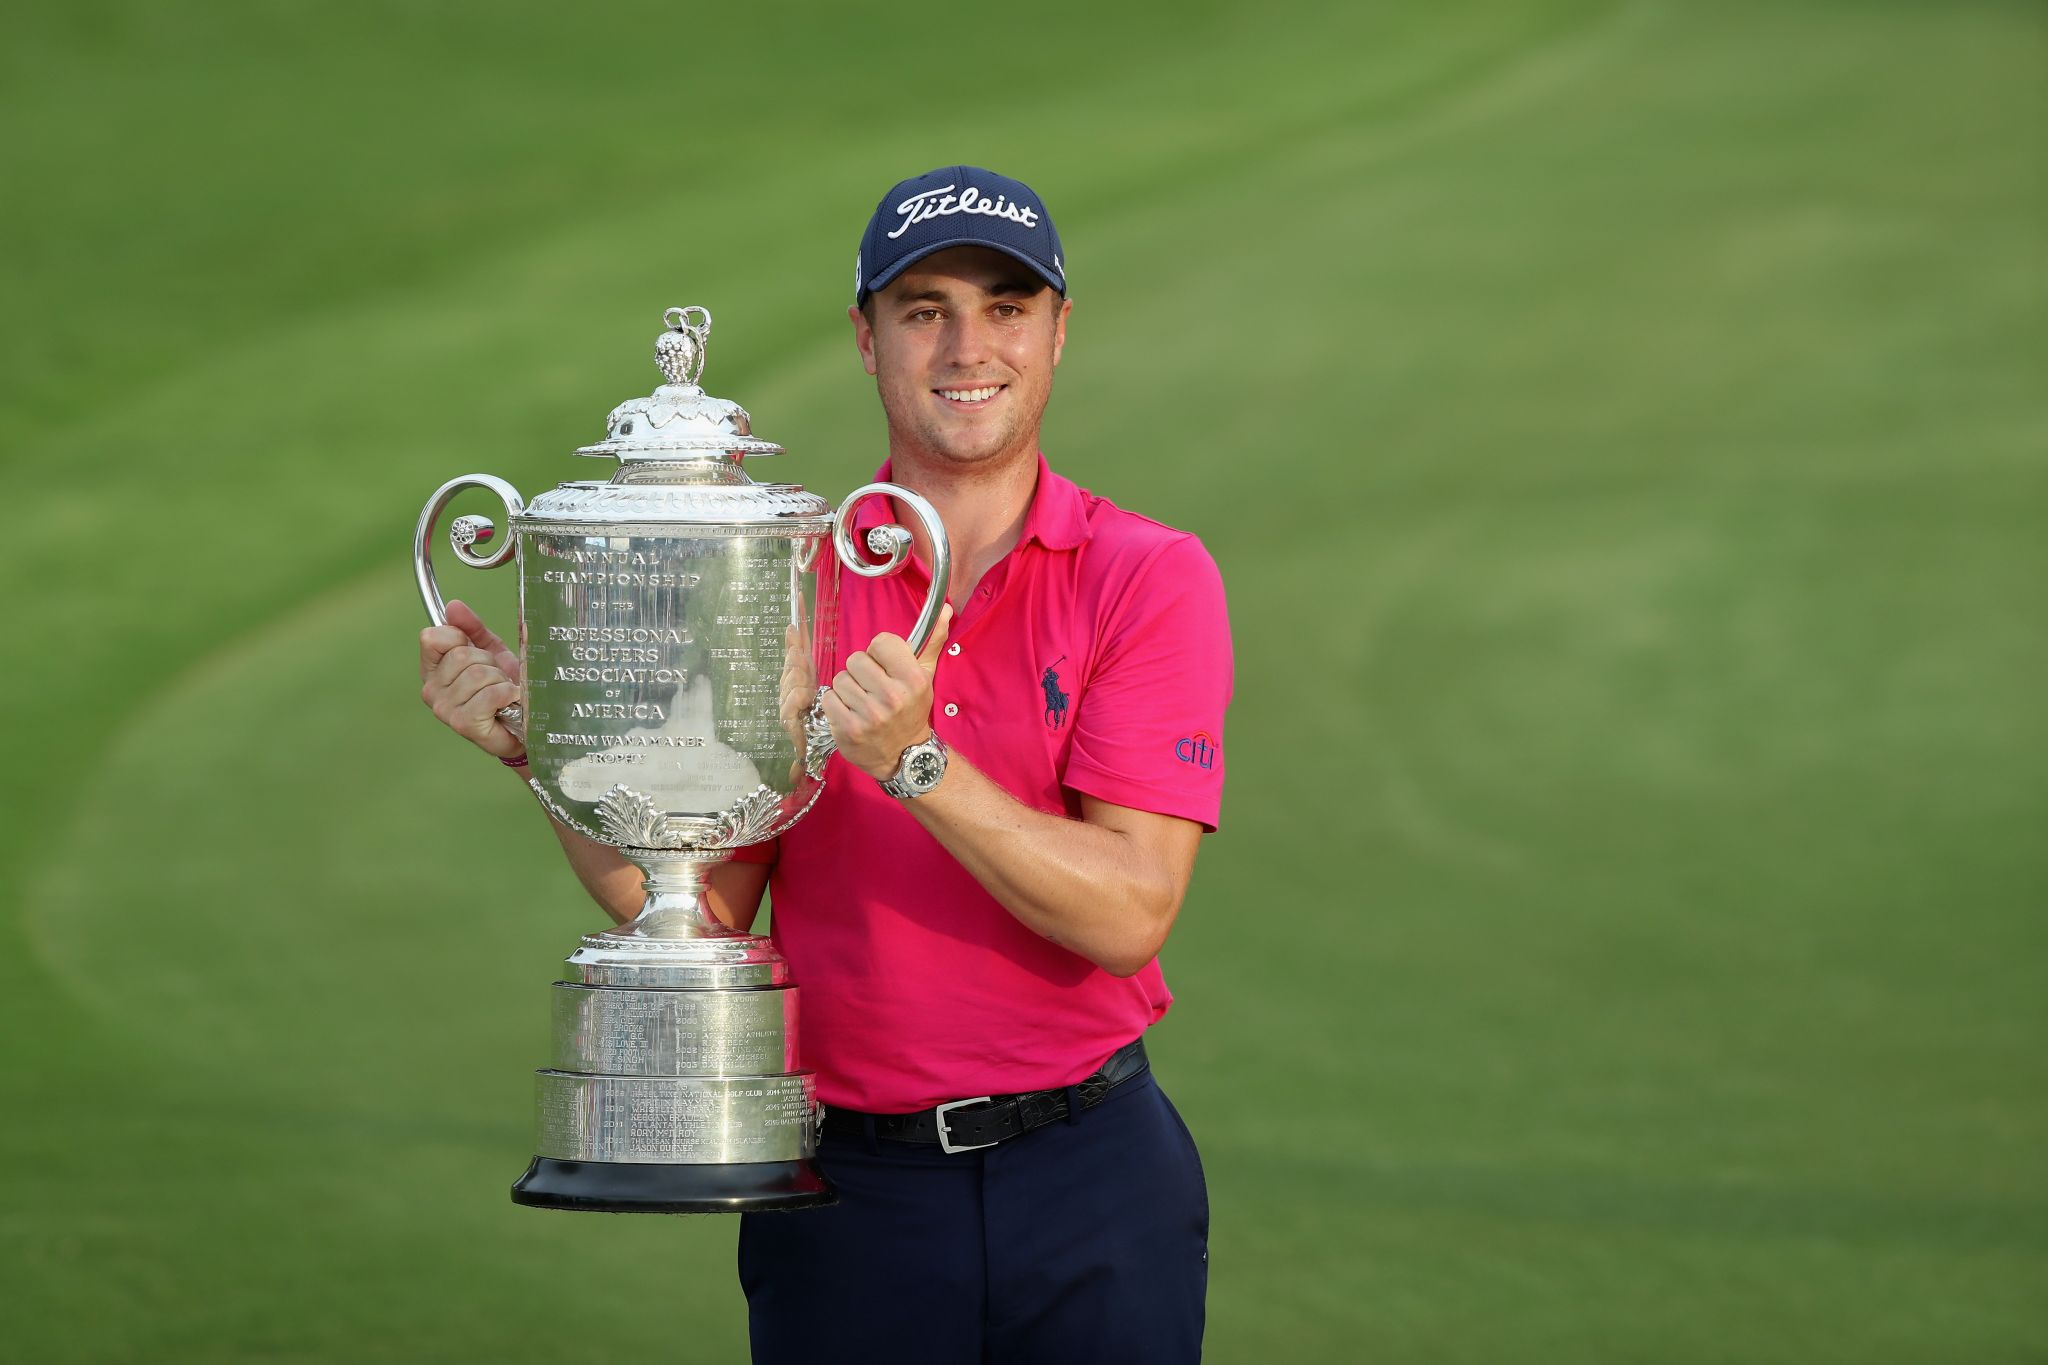 Justin Thomas wins the PGA Championship for his first major